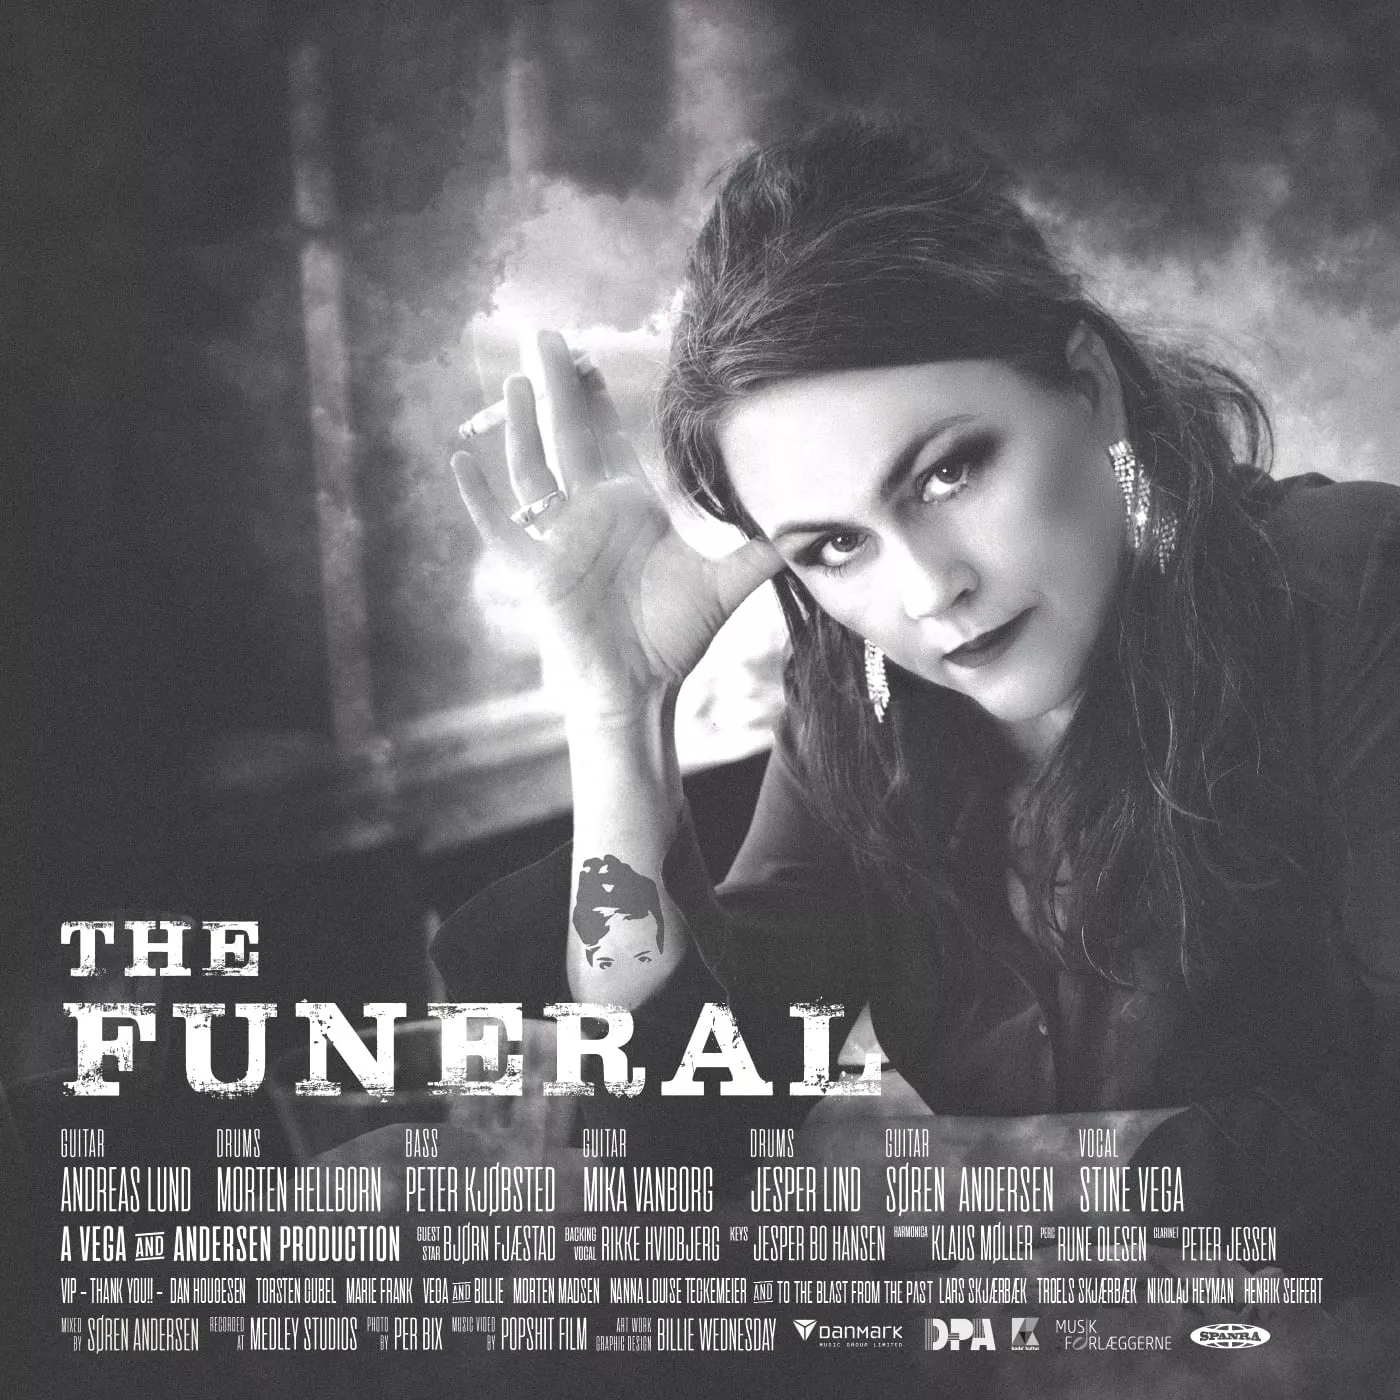 The Funeral - Stine Vega